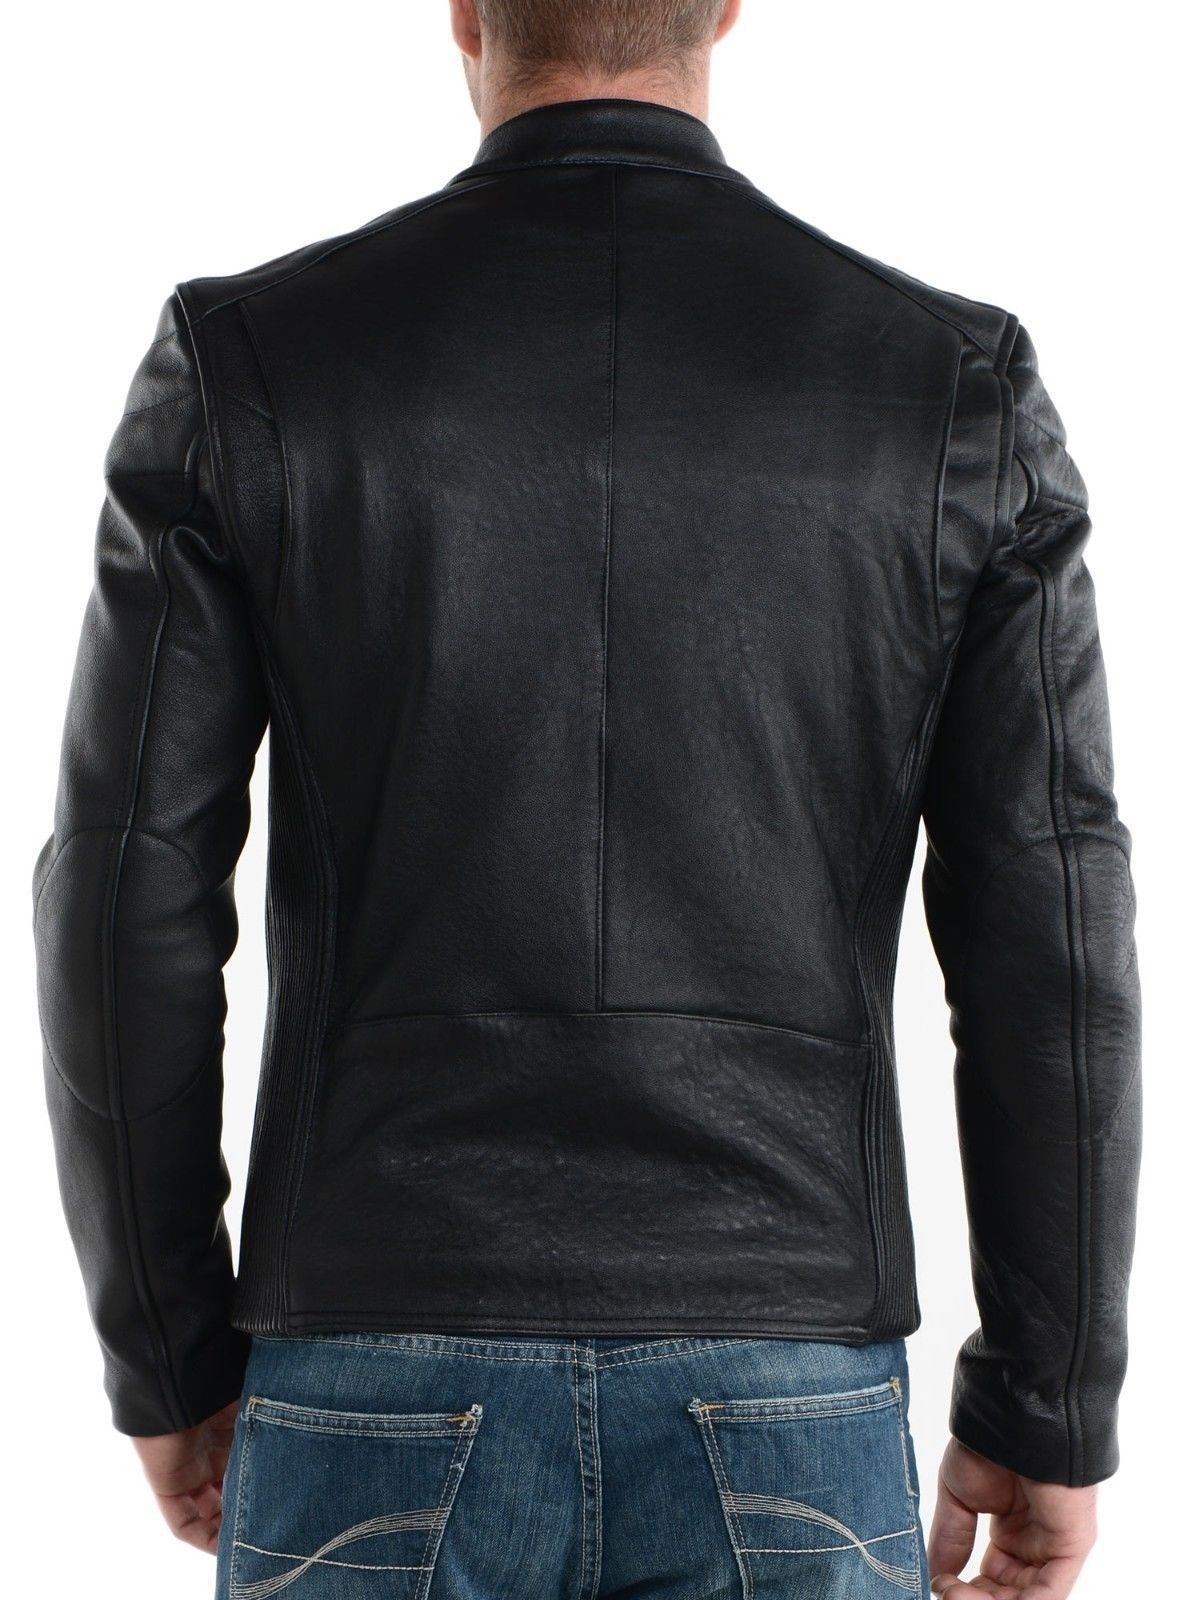 Urban Outlaw Leather Biker Jacket for Men